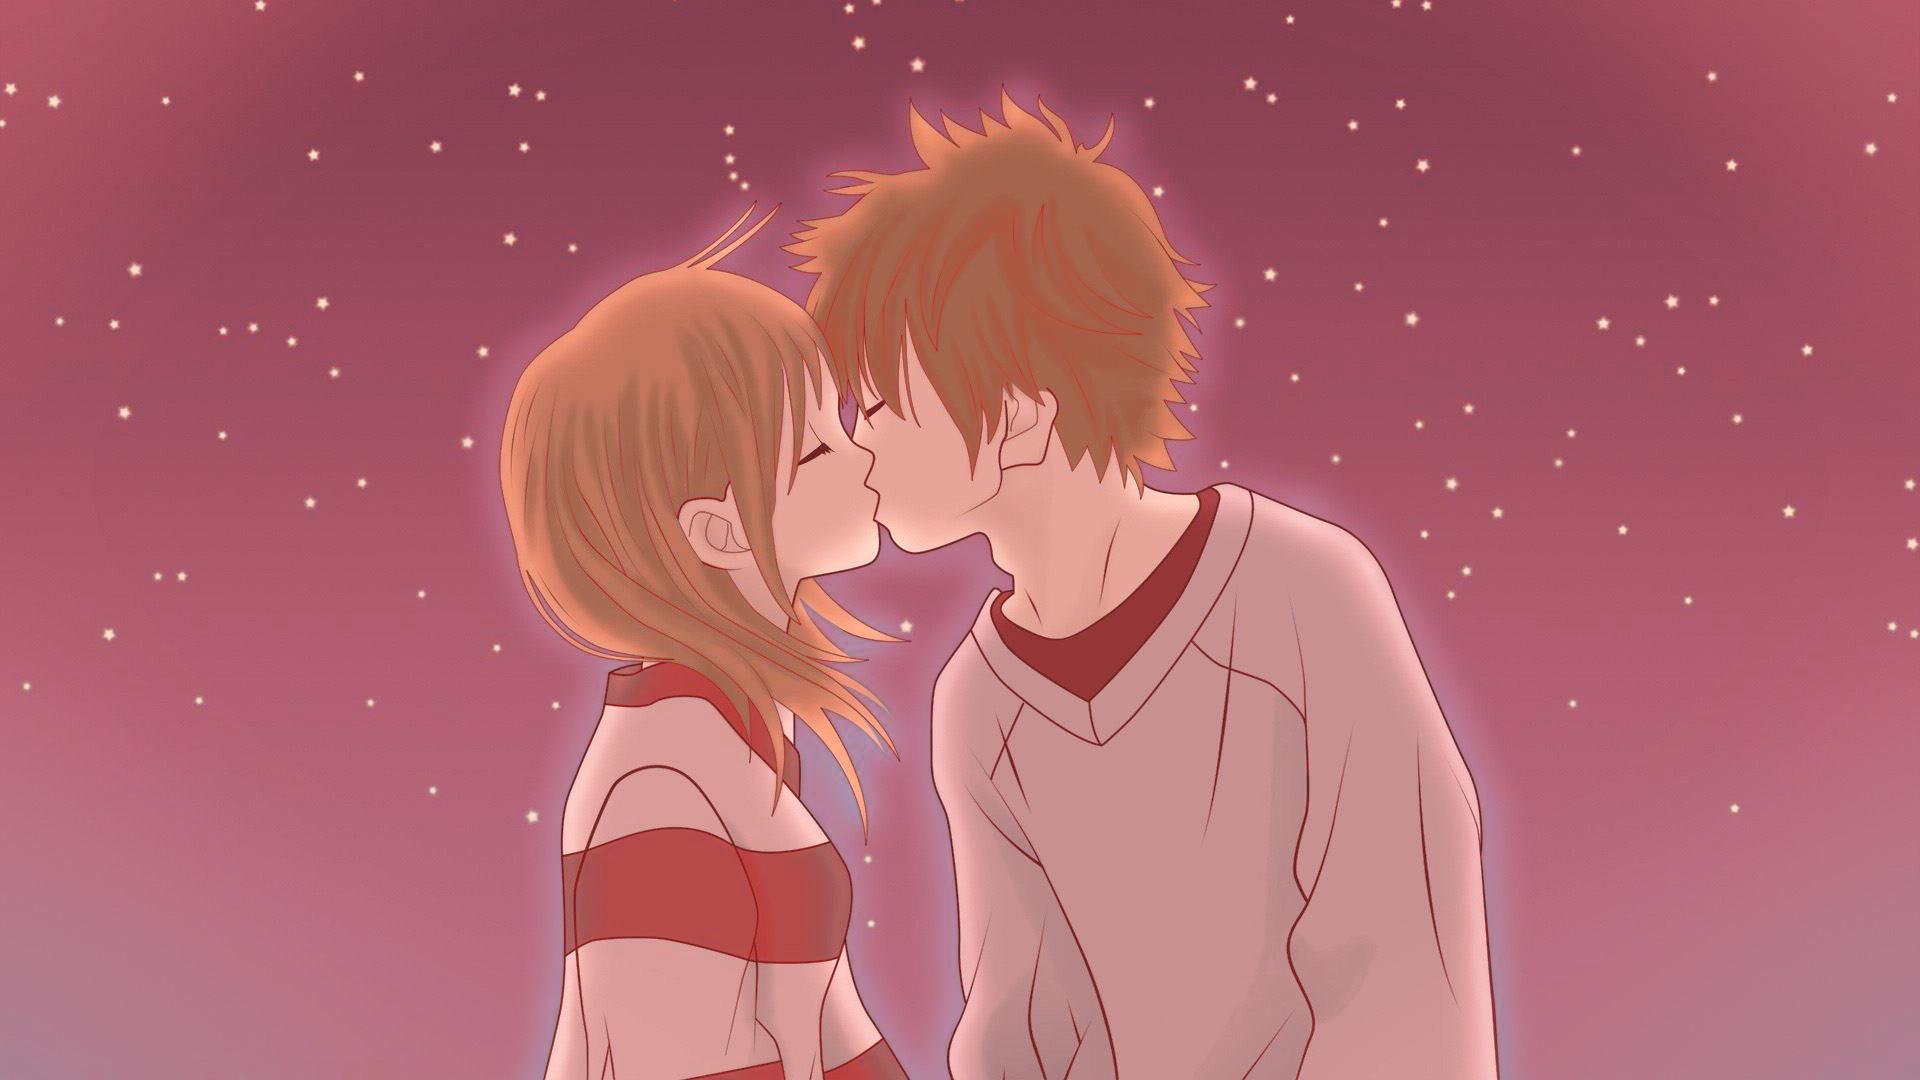 Couple Kiss Romantic Anime Wallpapers - Wallpaper Cave.